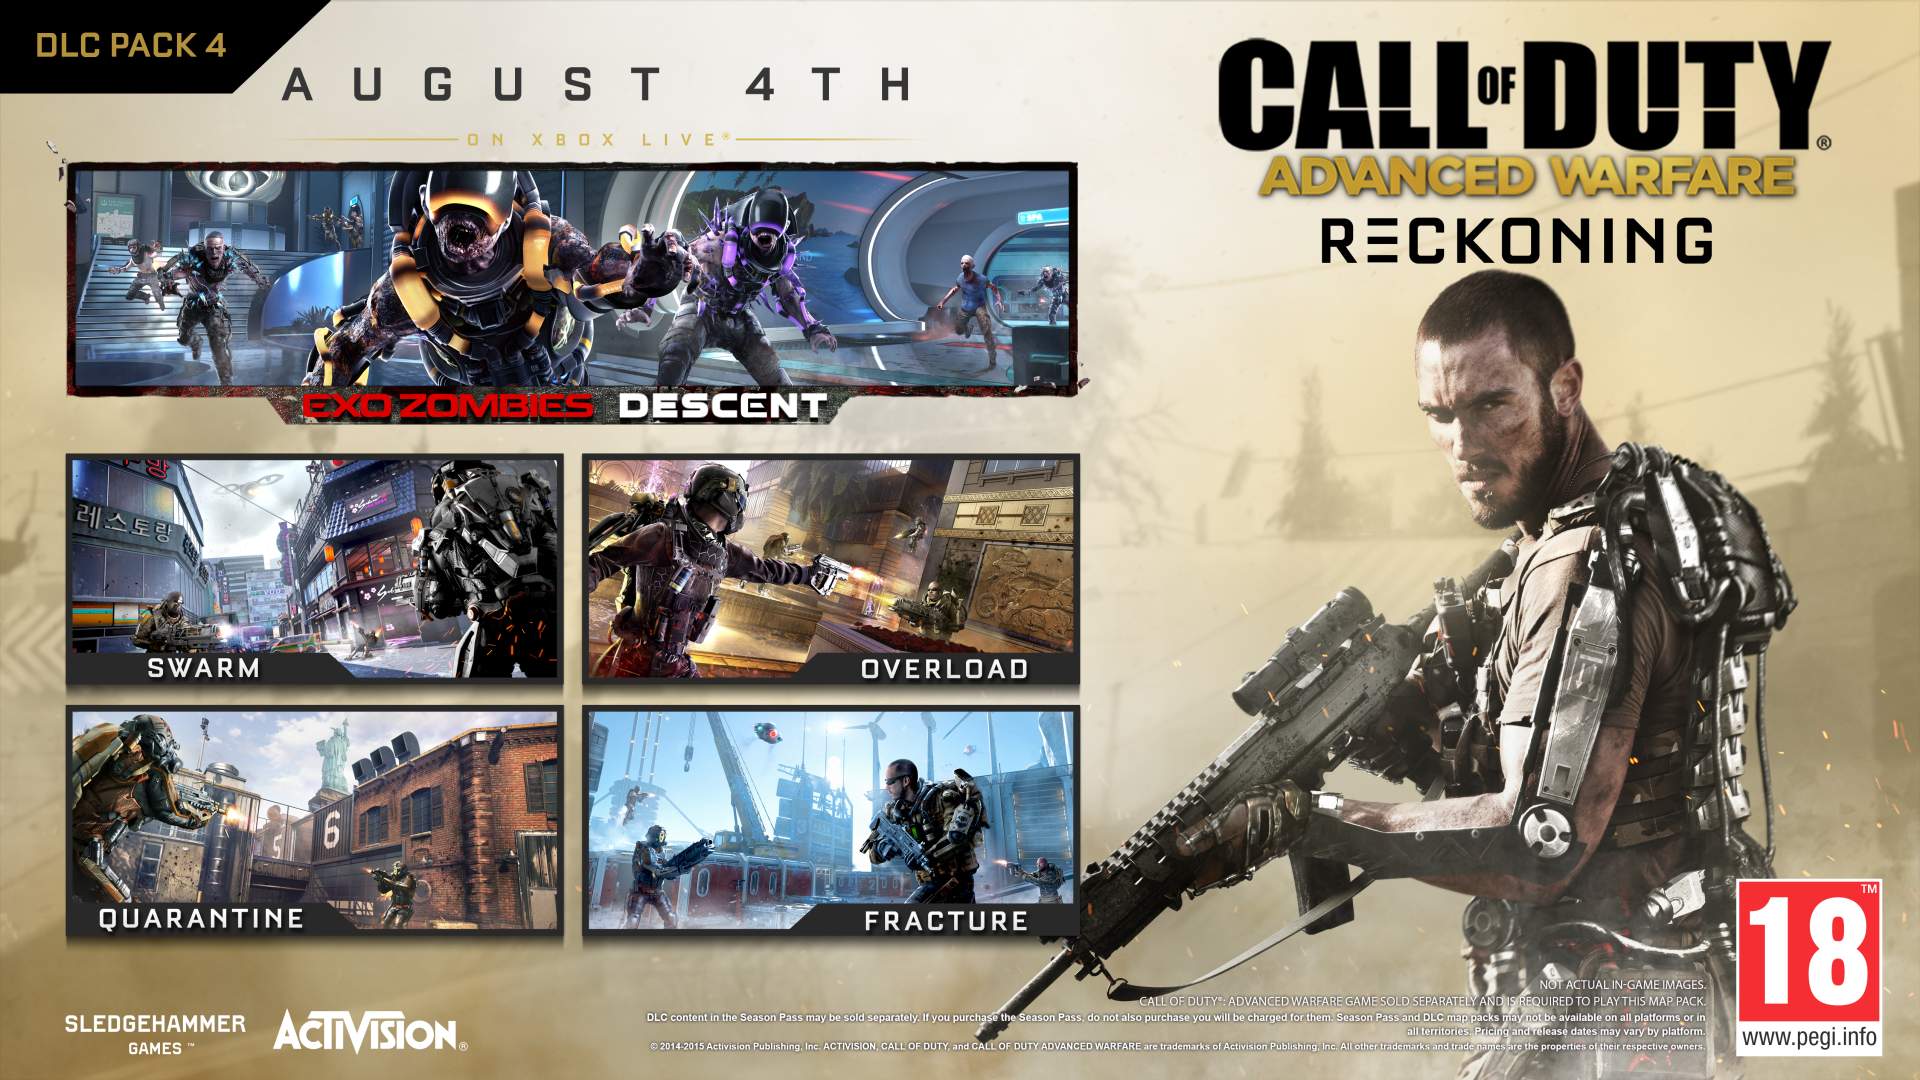 Review: Call of Duty: Advanced Warfare